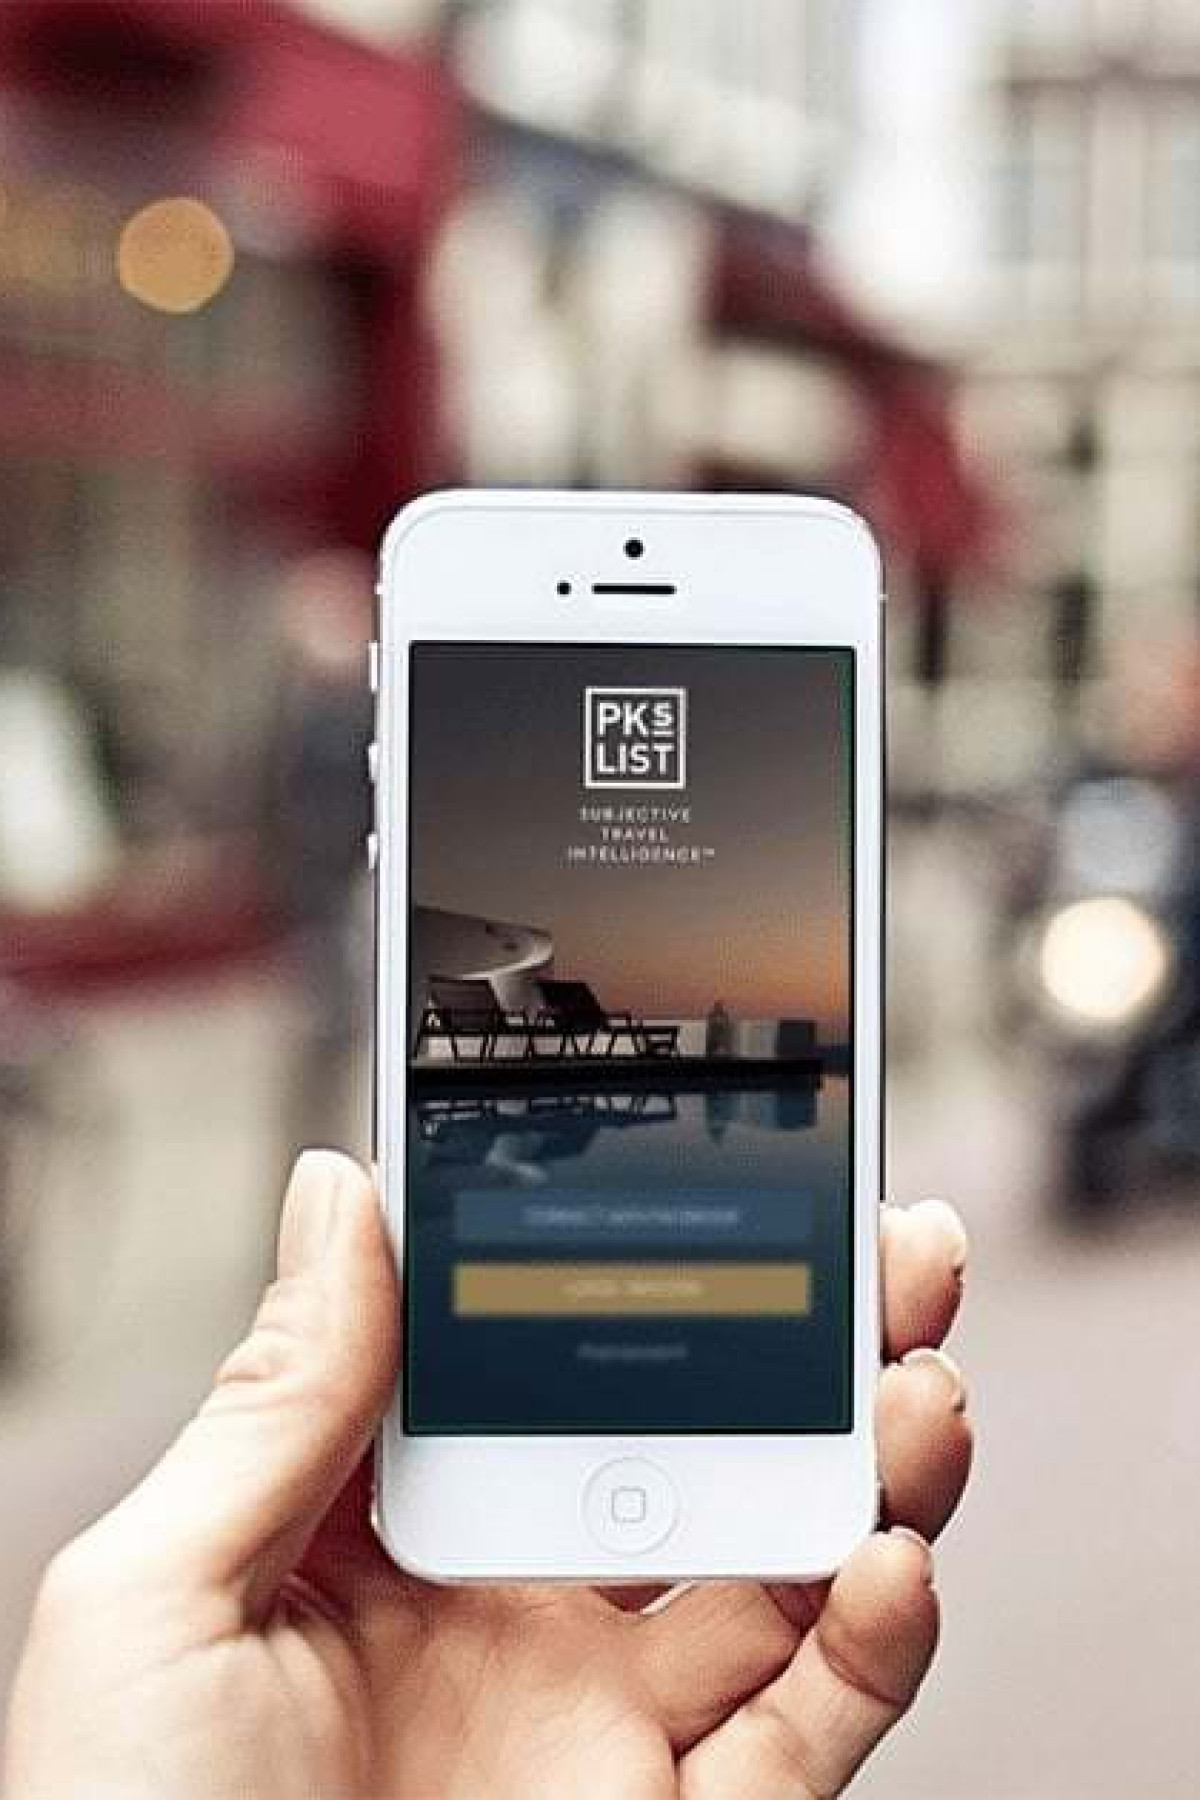 pks-list-hotel-app-featured.jpg